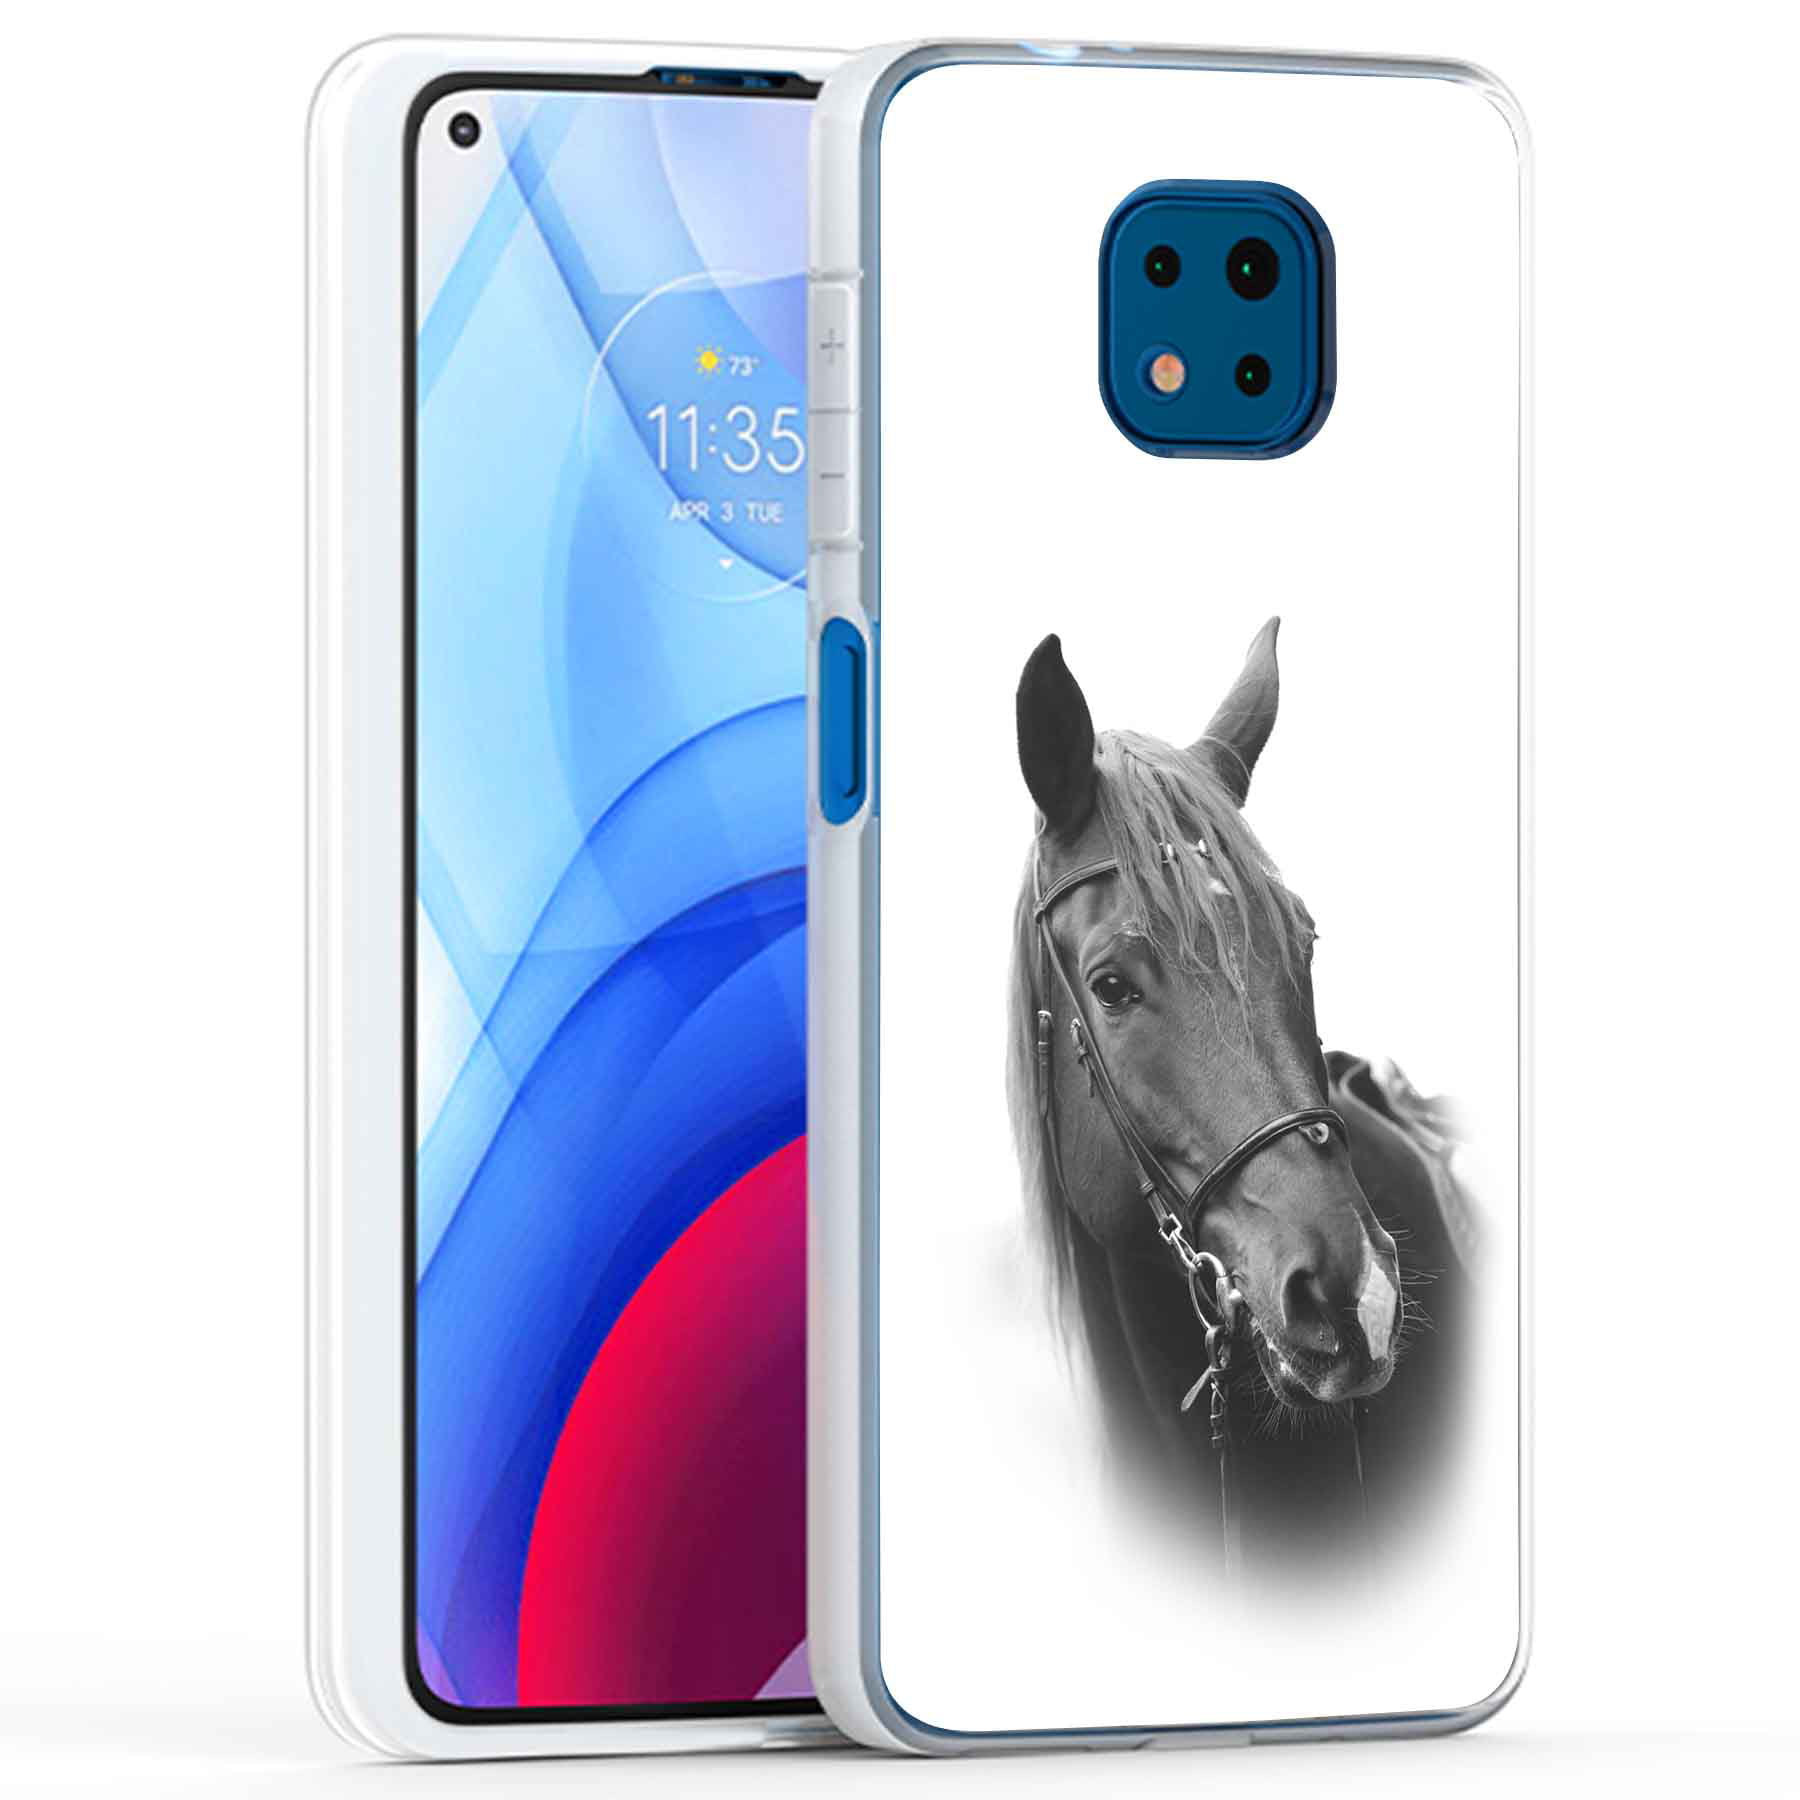 Clear Phone Case Cover Motorola Moto G Power 2021,Moto G Power,Animal Horse Theme Print,Light,Flexible,ProtectUSA